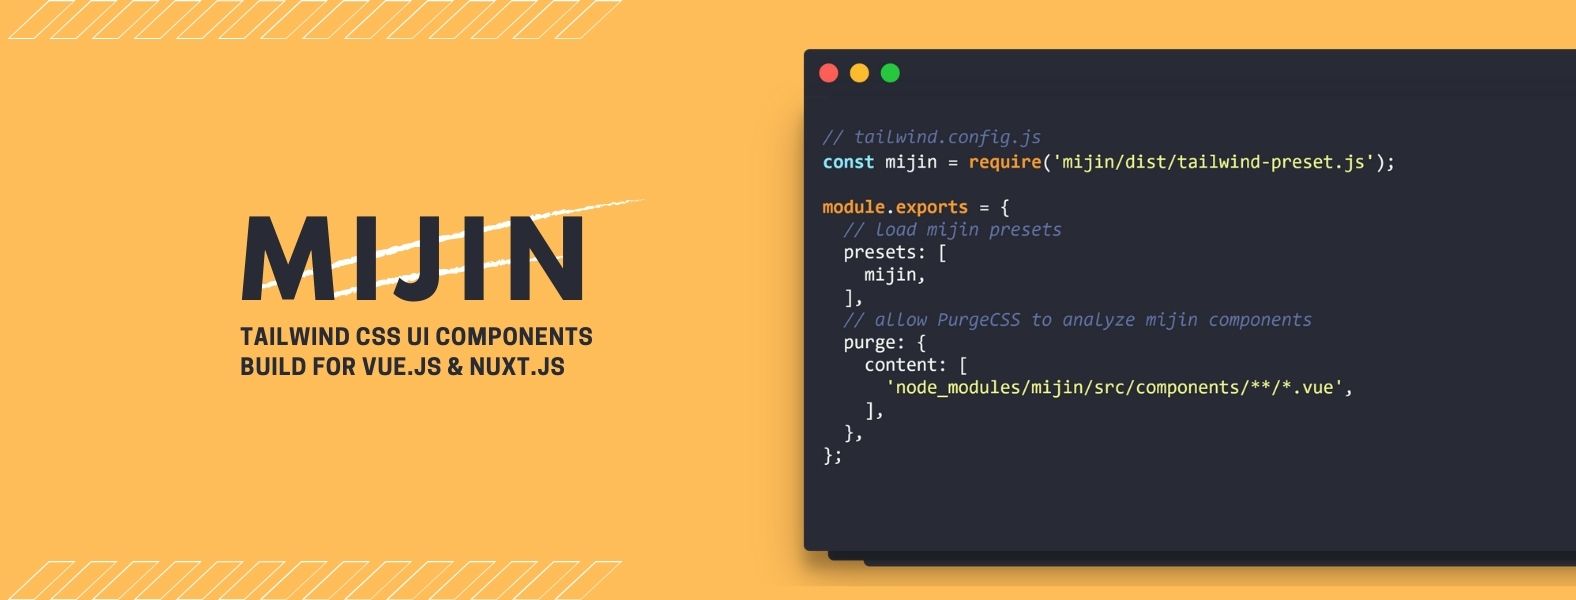 Mijin - Tailwind CSS UI Components Build for Vue & Nuxt